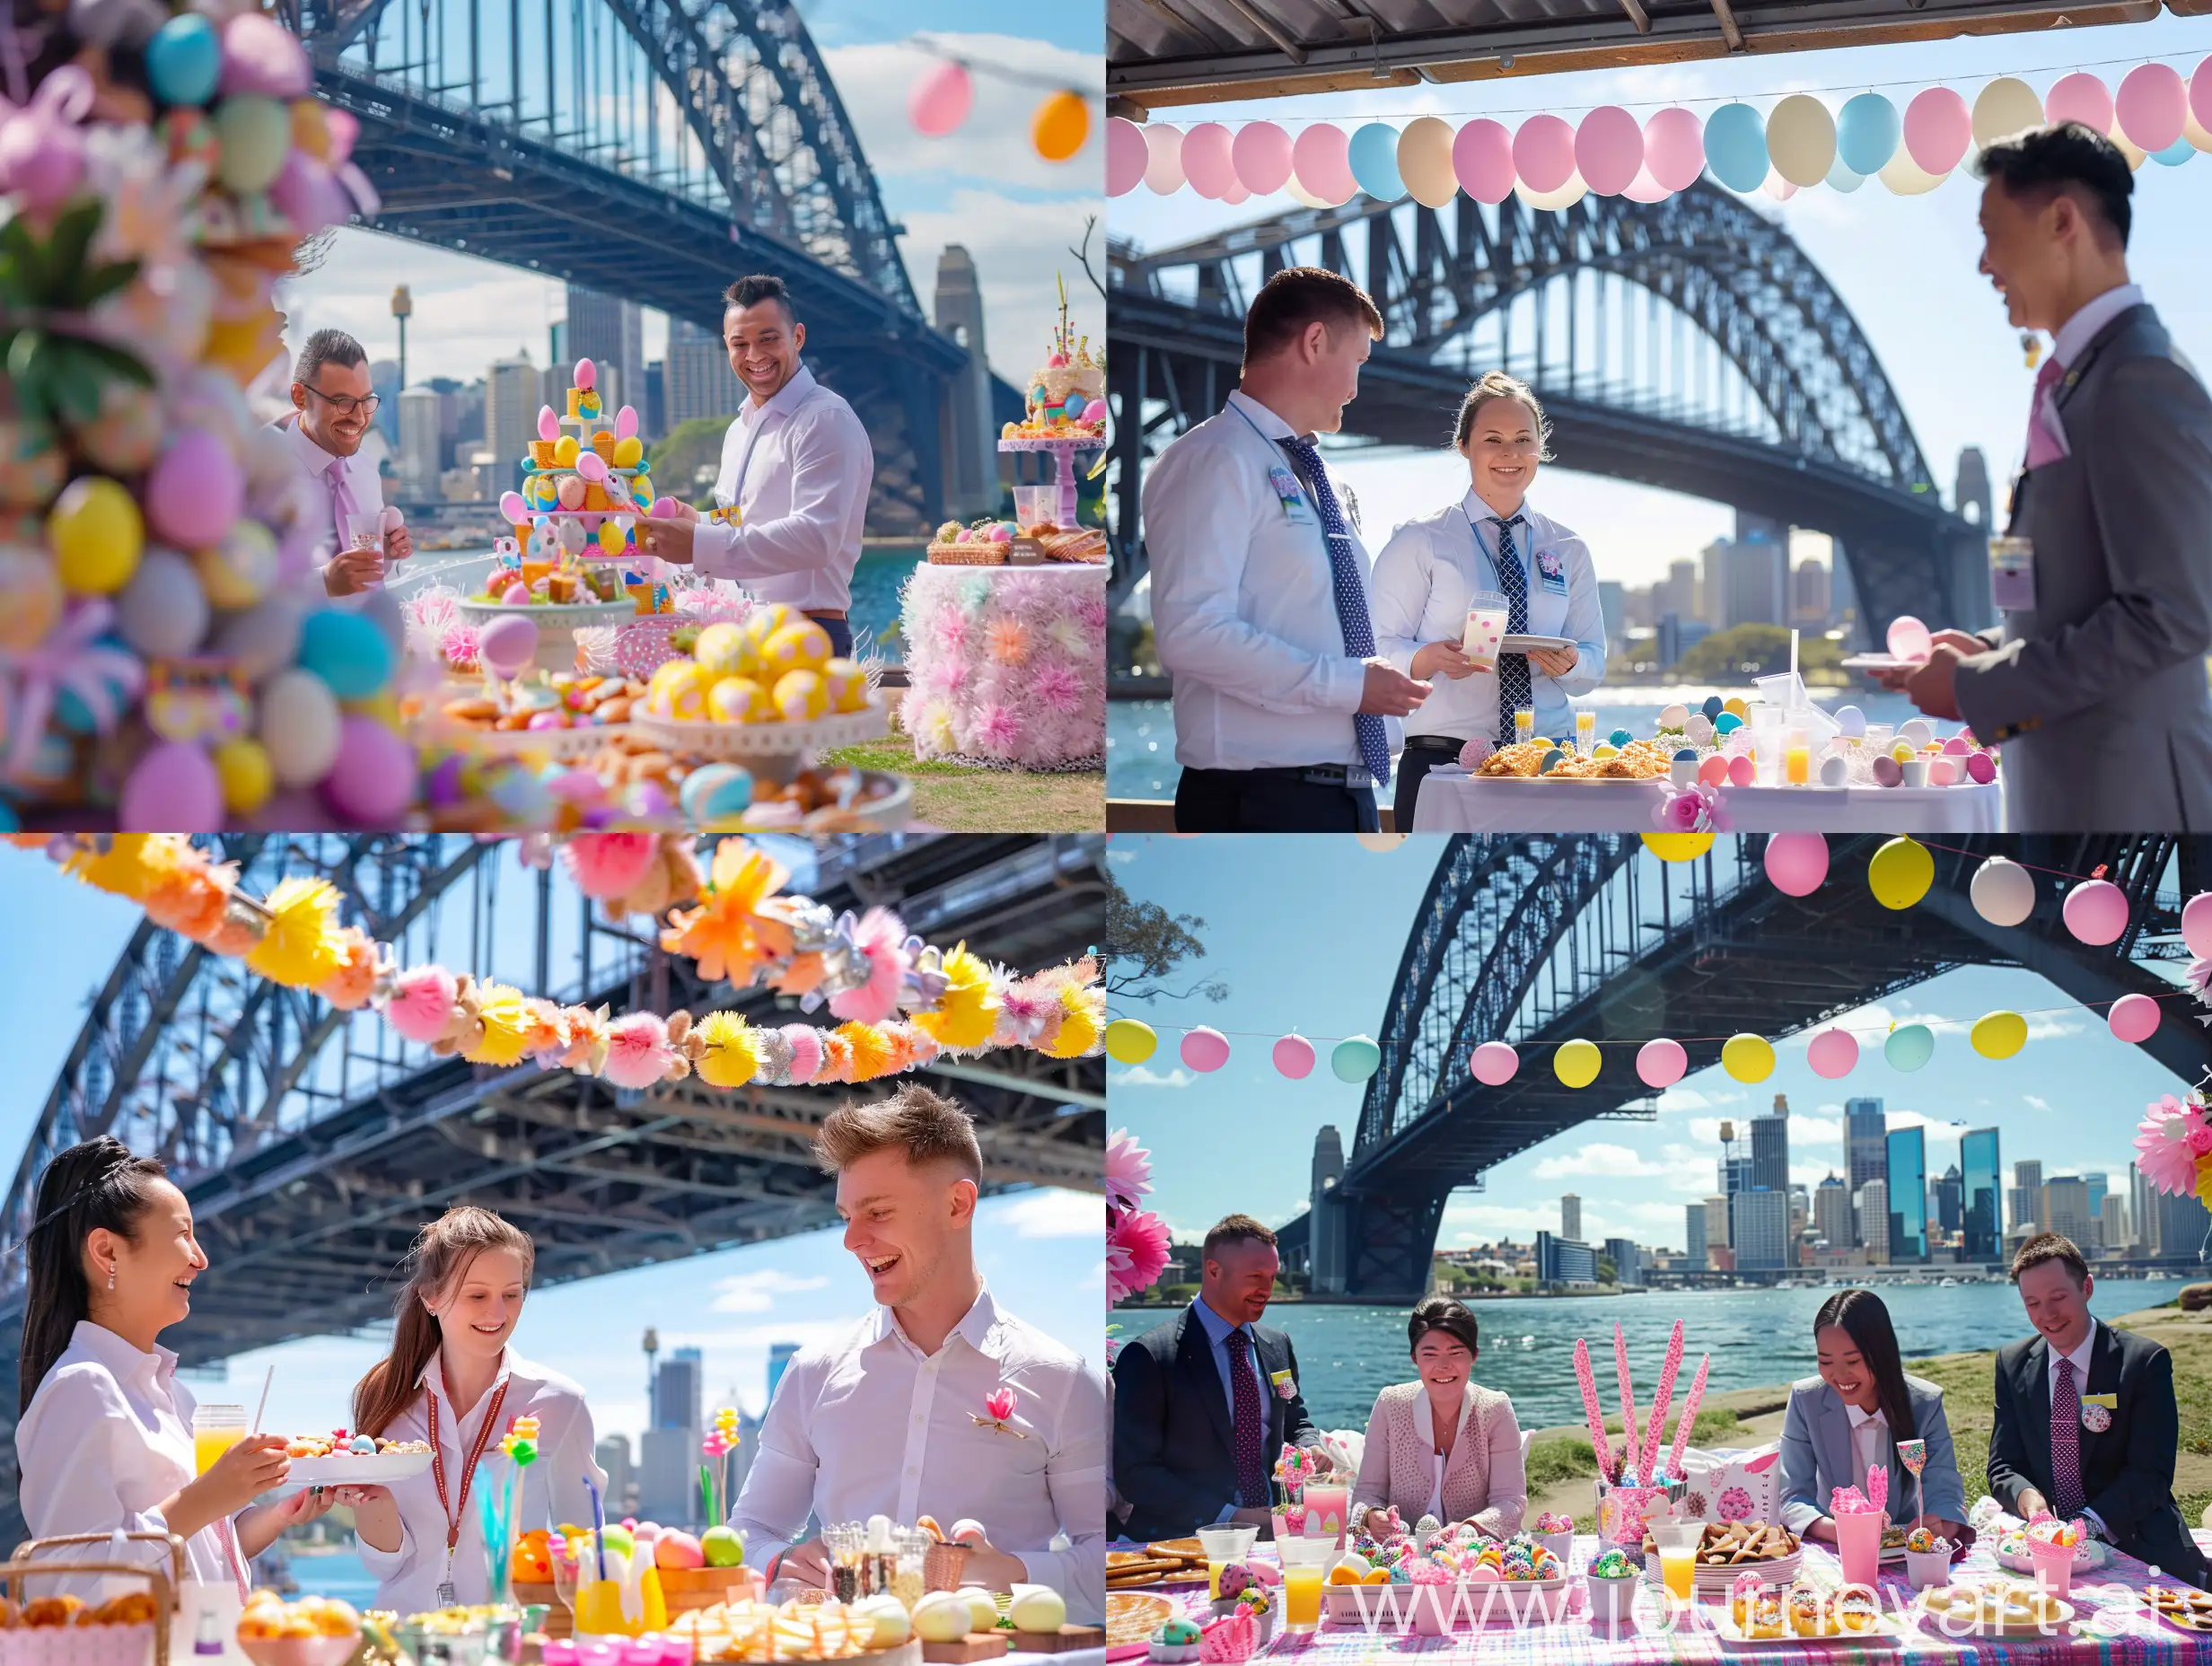 Easter-Party-Celebration-by-Sydney-Harbor-Bridge-with-International-Bank-Staff